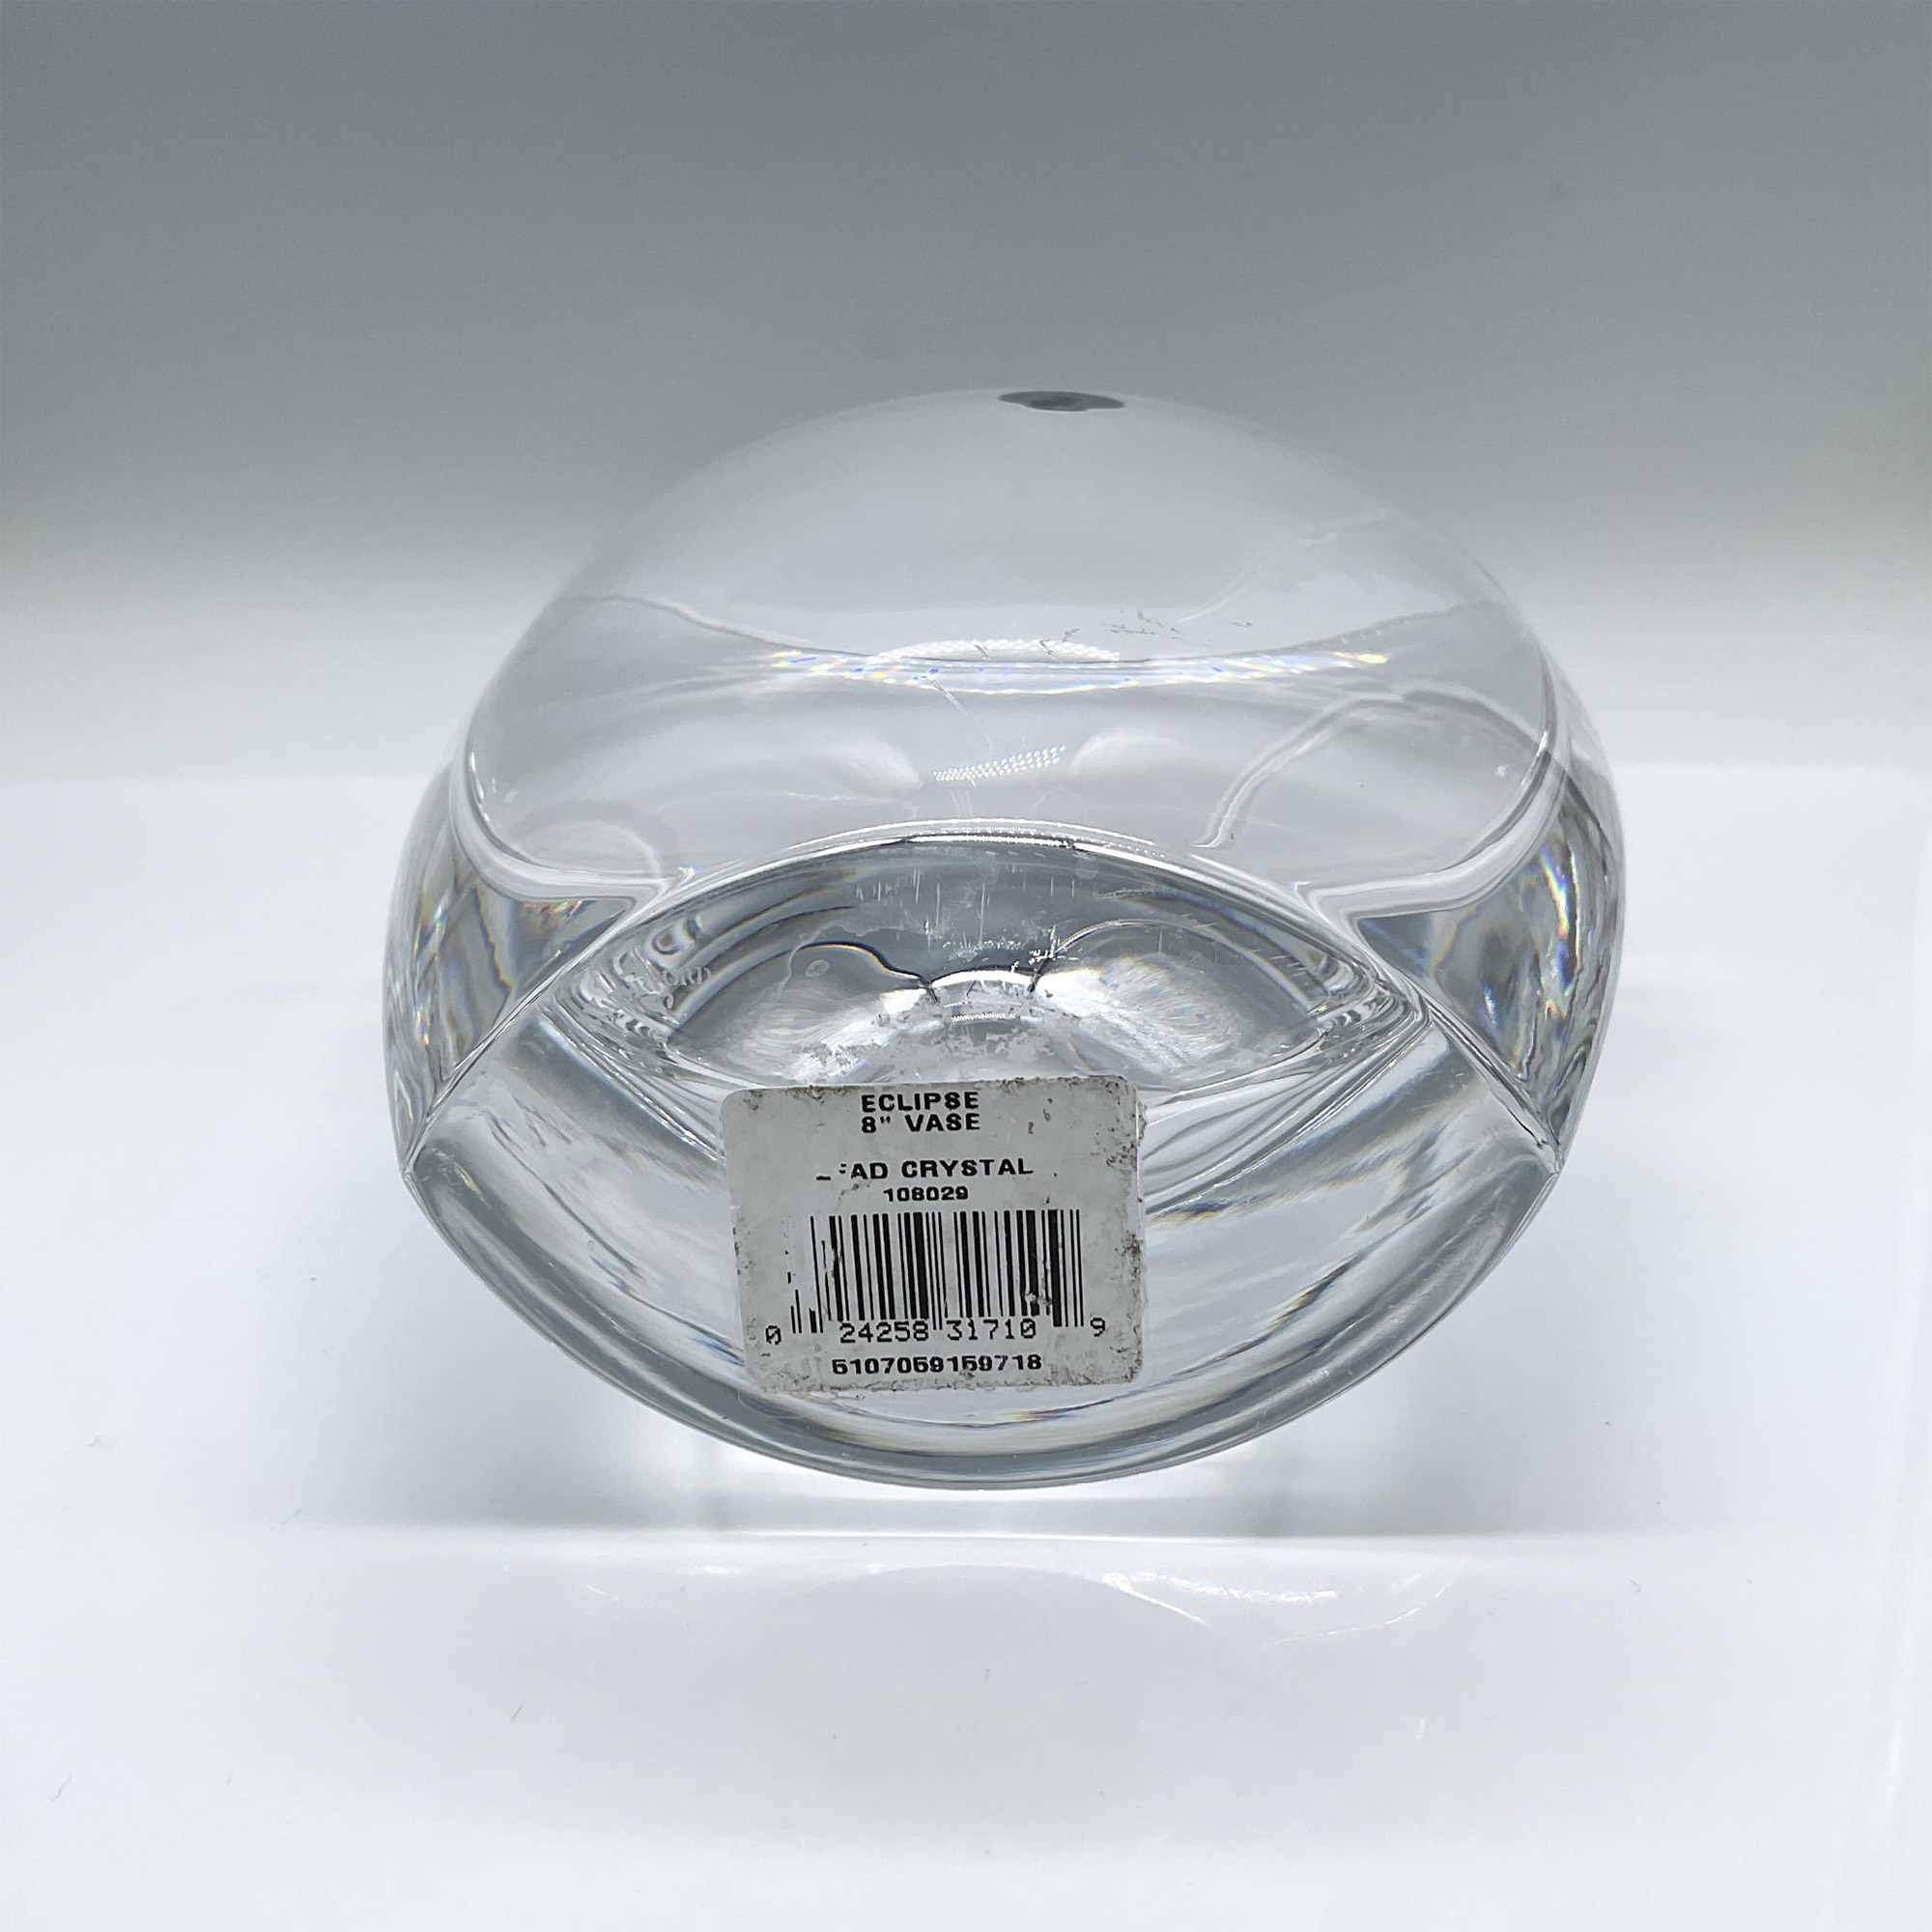 Waterford Crystal Vase, Eclipse - Image 4 of 4